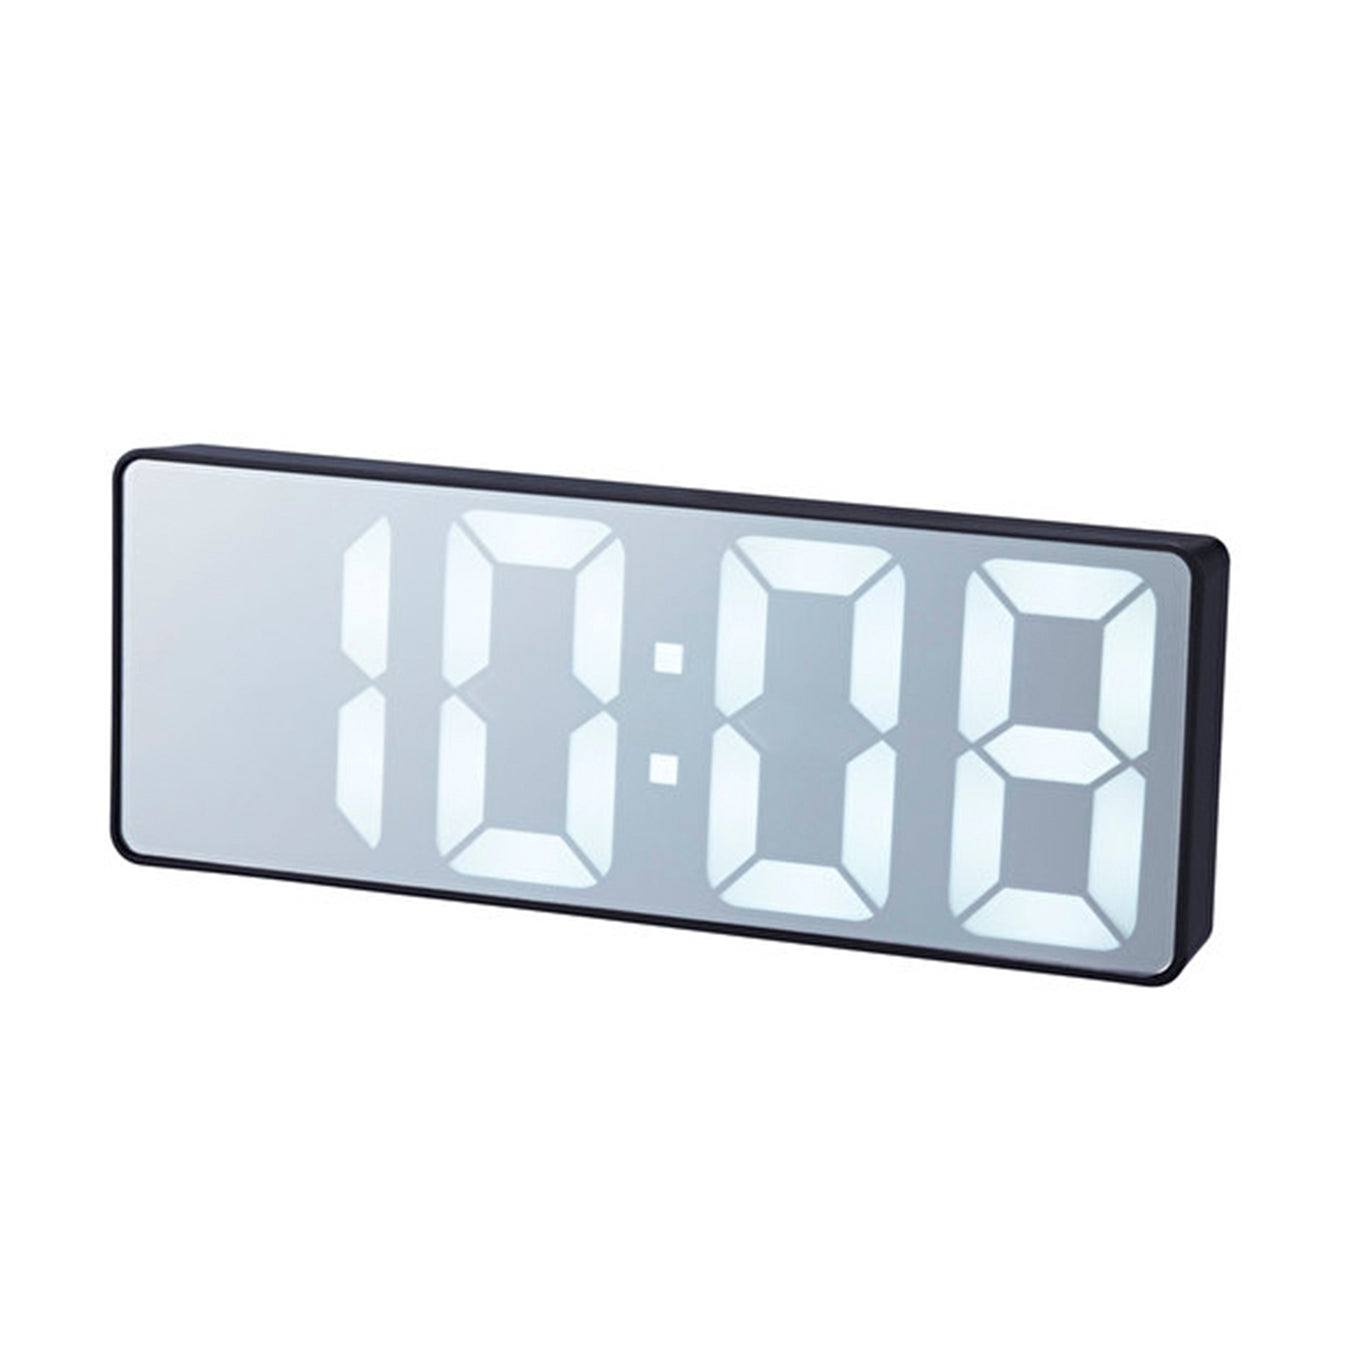 BRUNO LED Mirror Clock - Ivory BCA025-IV